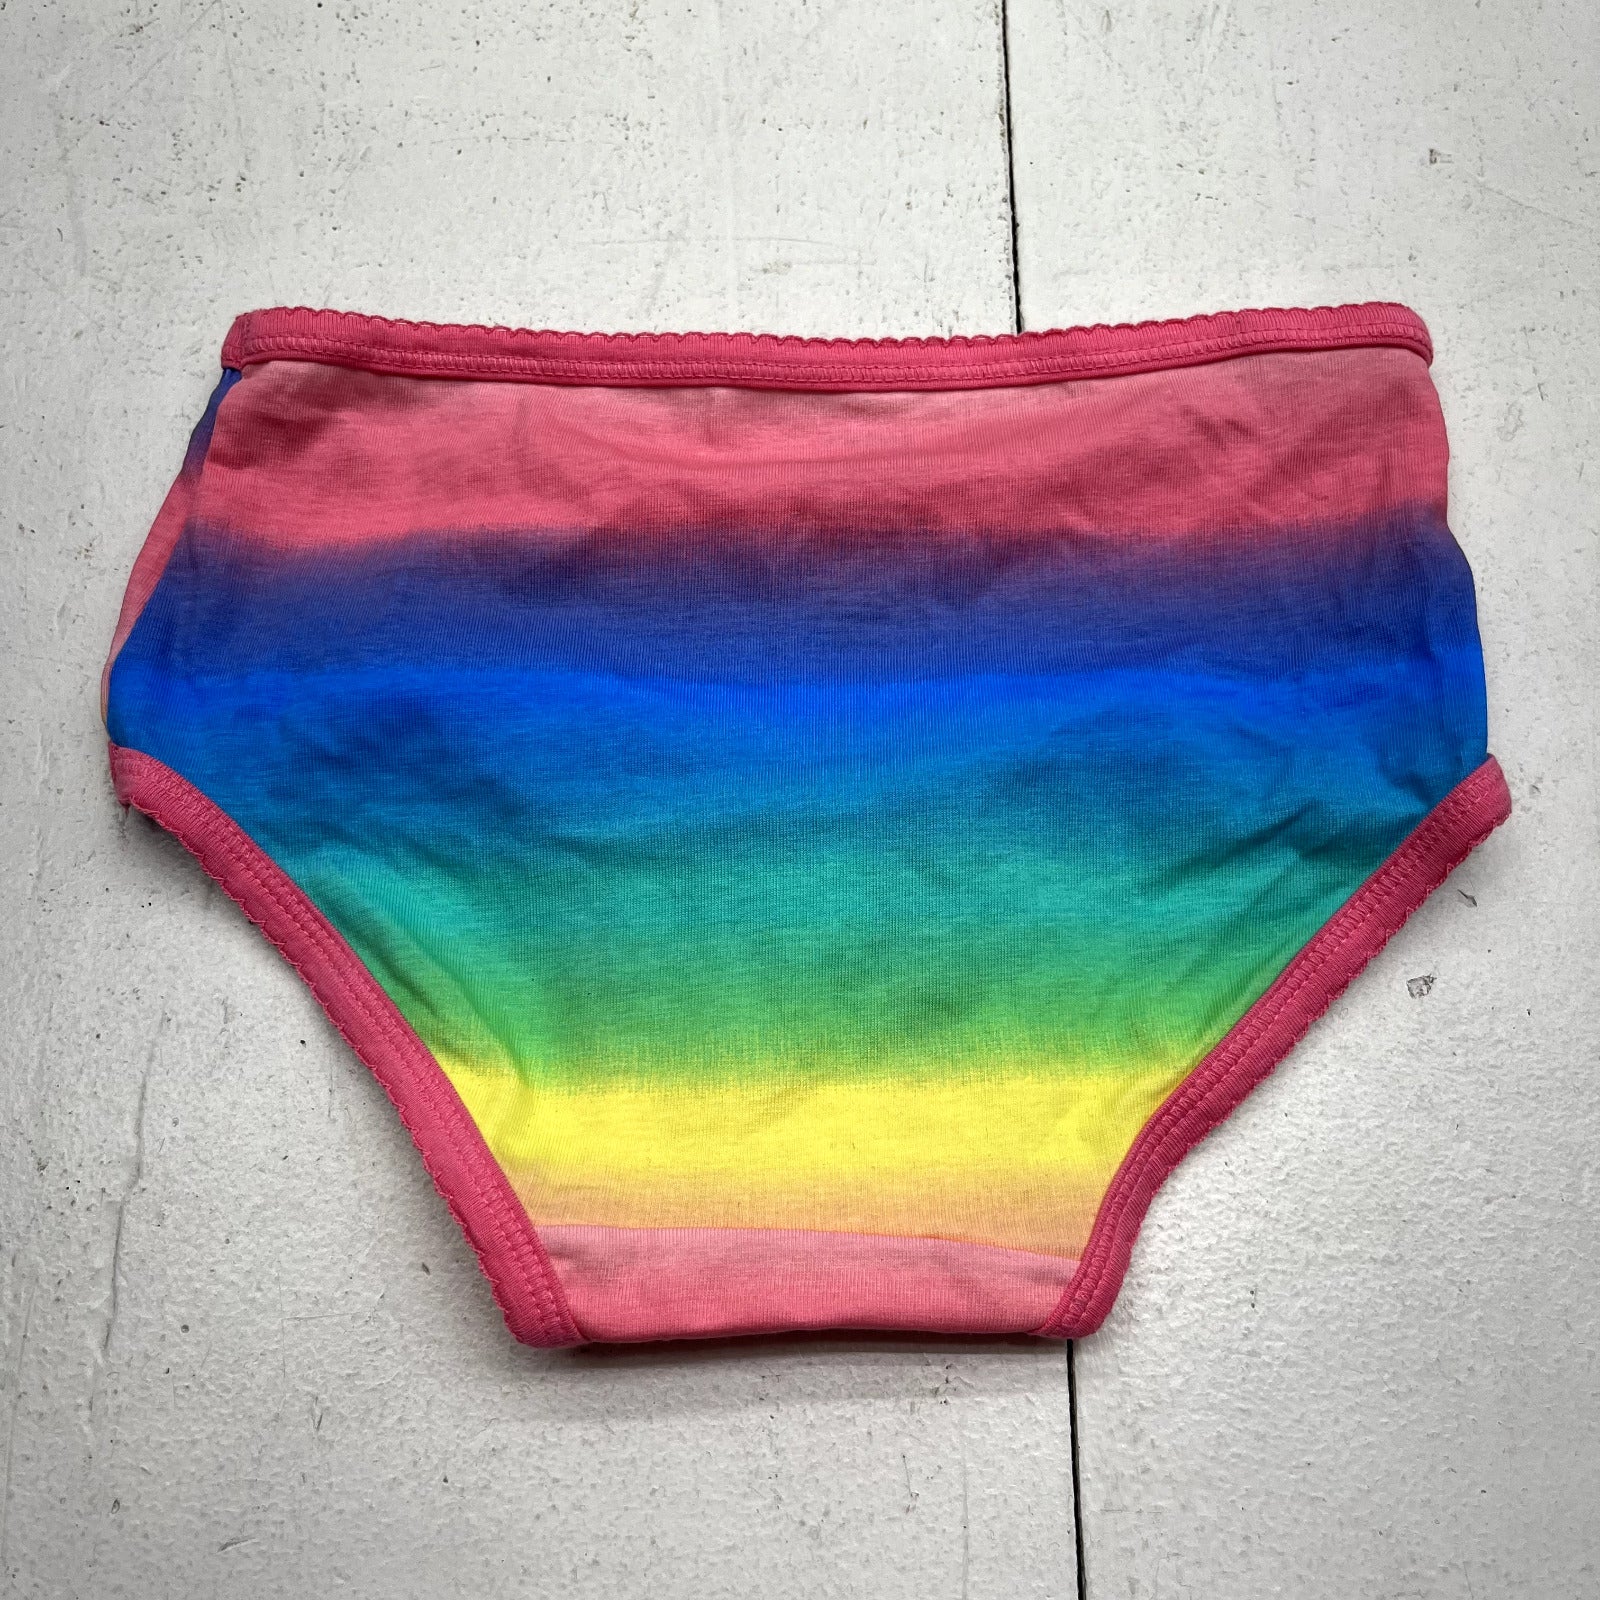 Carters Multicolored Brief Underwear Girls Size 8 NEW - beyond